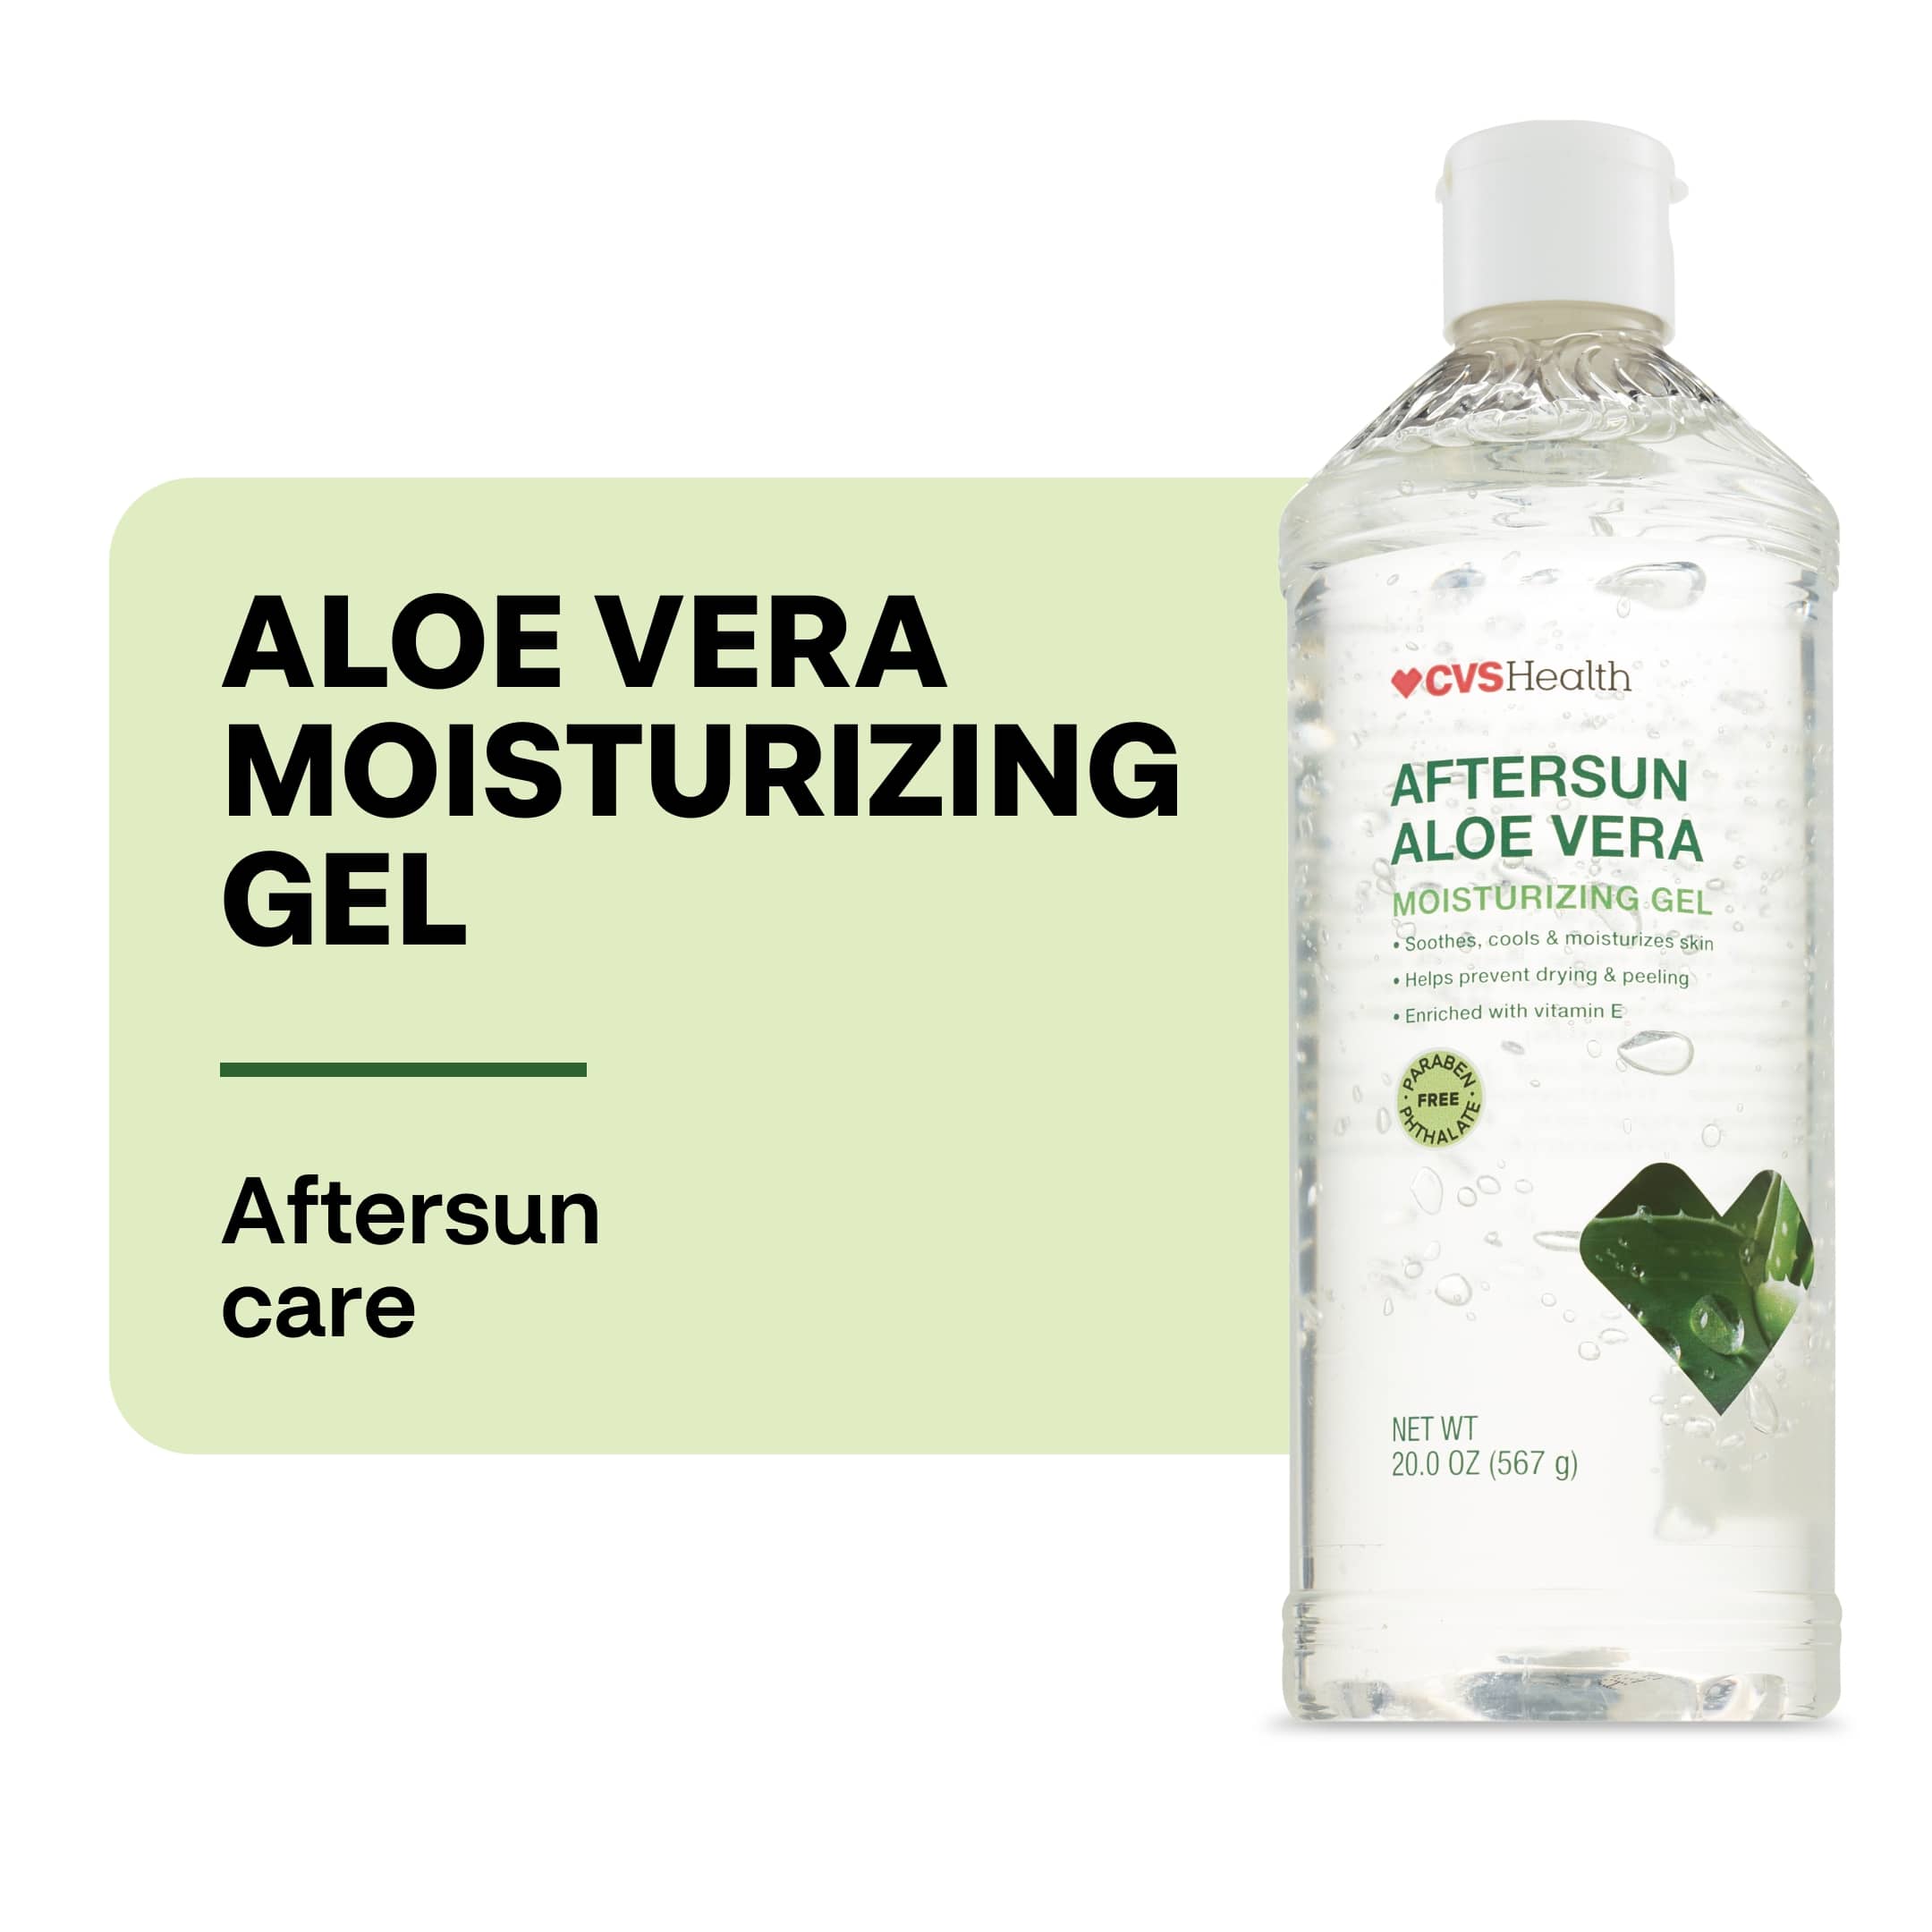 Cvs health aftersun aloe vera moisturizing gel cigna austin tx